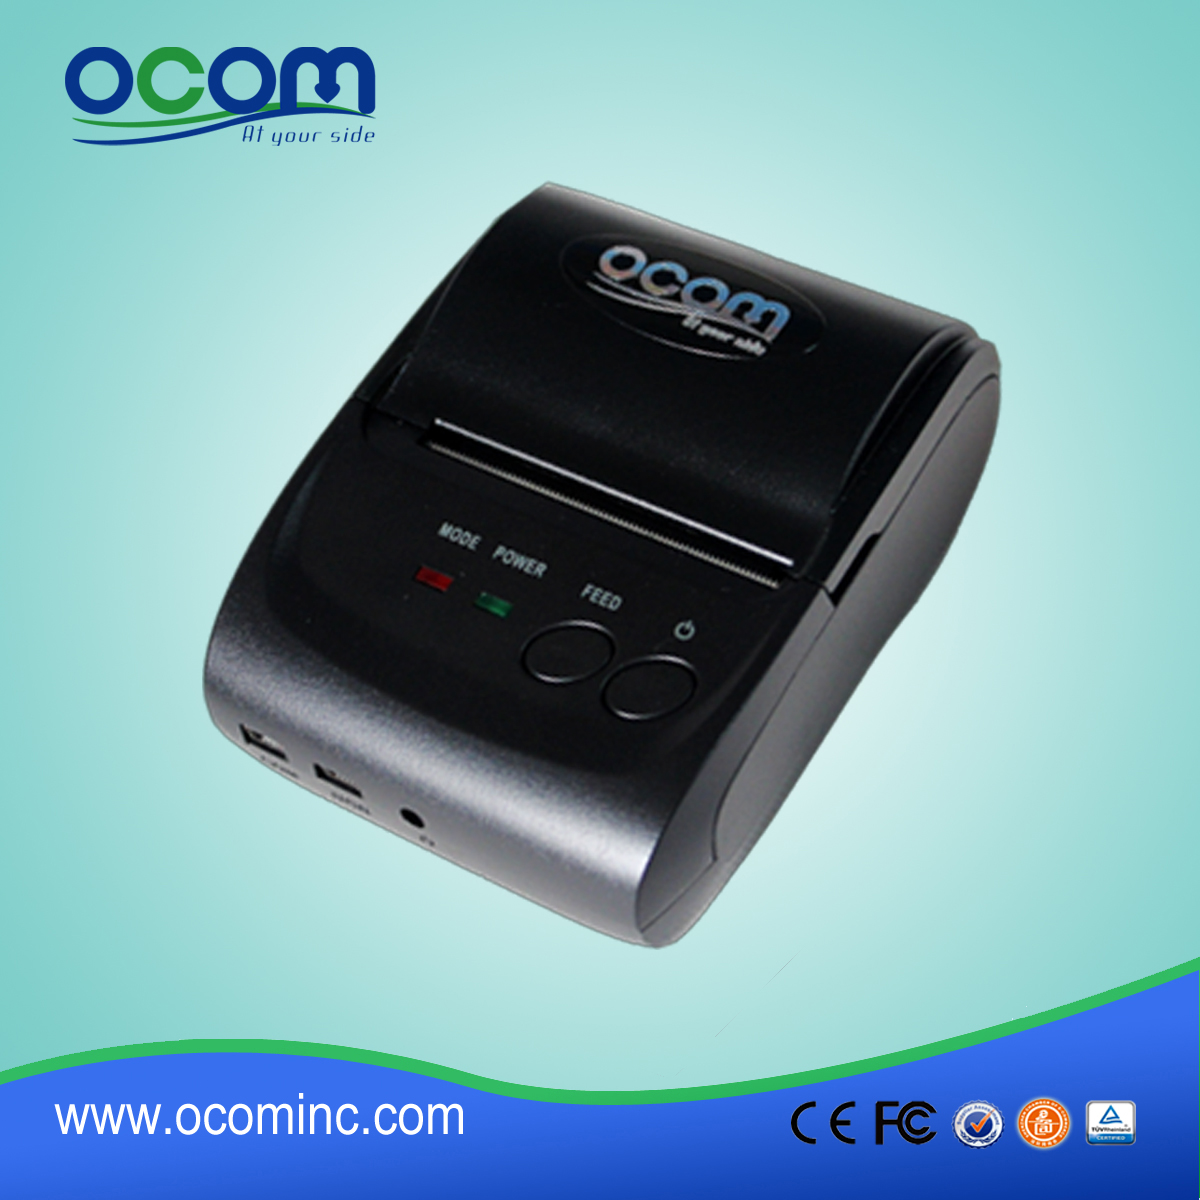 OCPP-M05: przenośna drukarka termiczna cena, drukarka termiczna drukarka Android poz